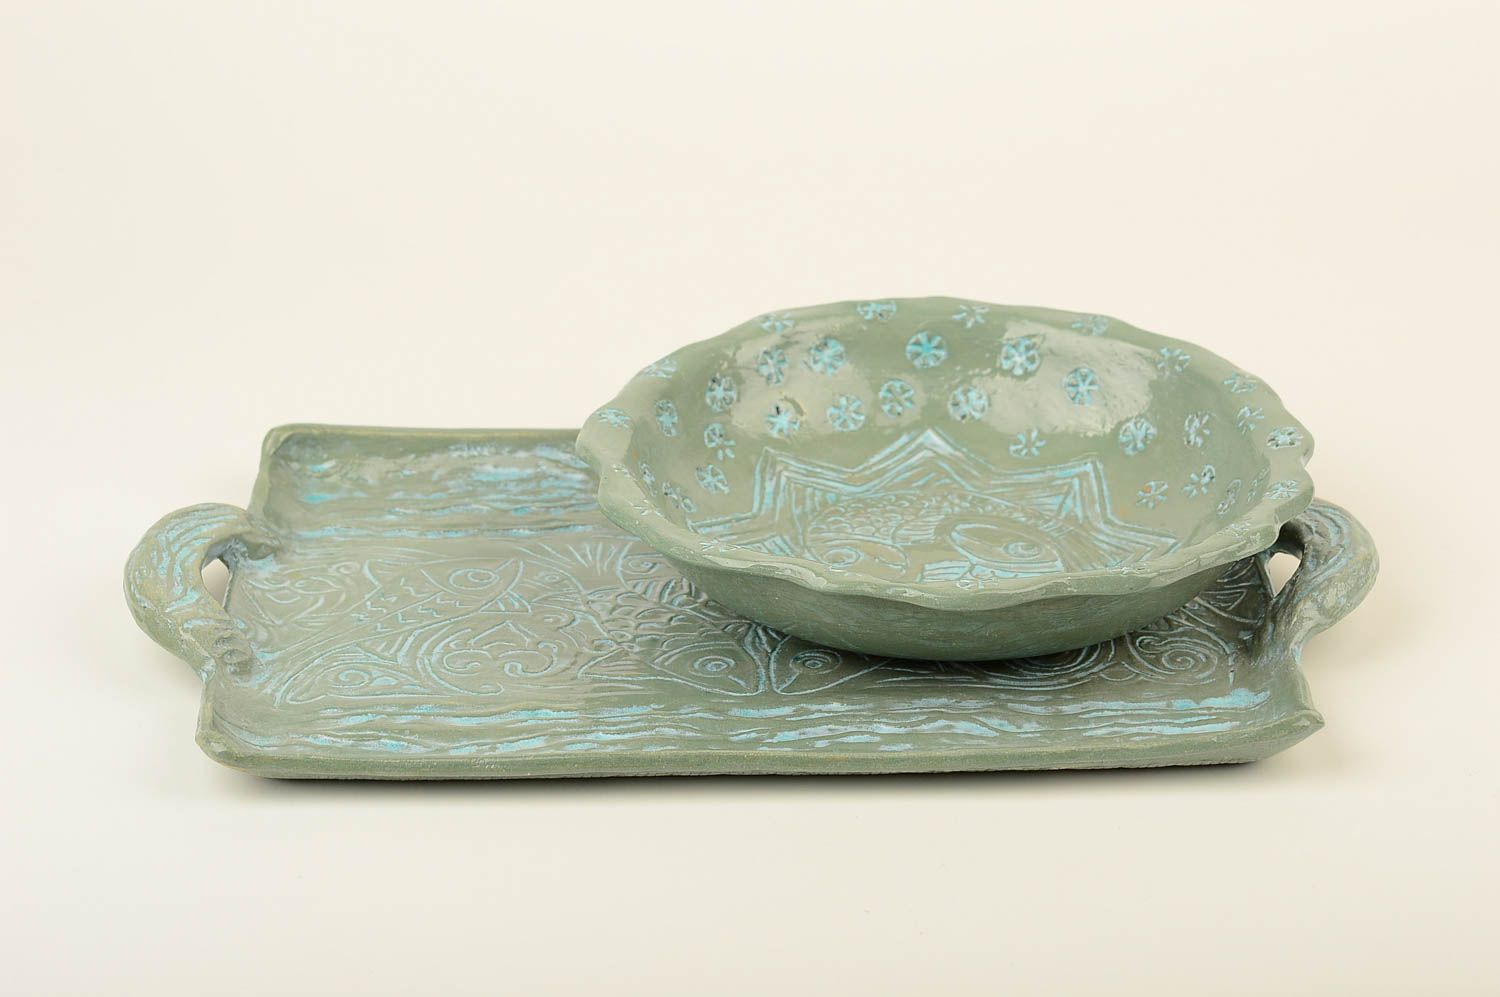 Unusual handmade ceramic bowl molded ceramic tray stylish kitchenware ideas photo 3